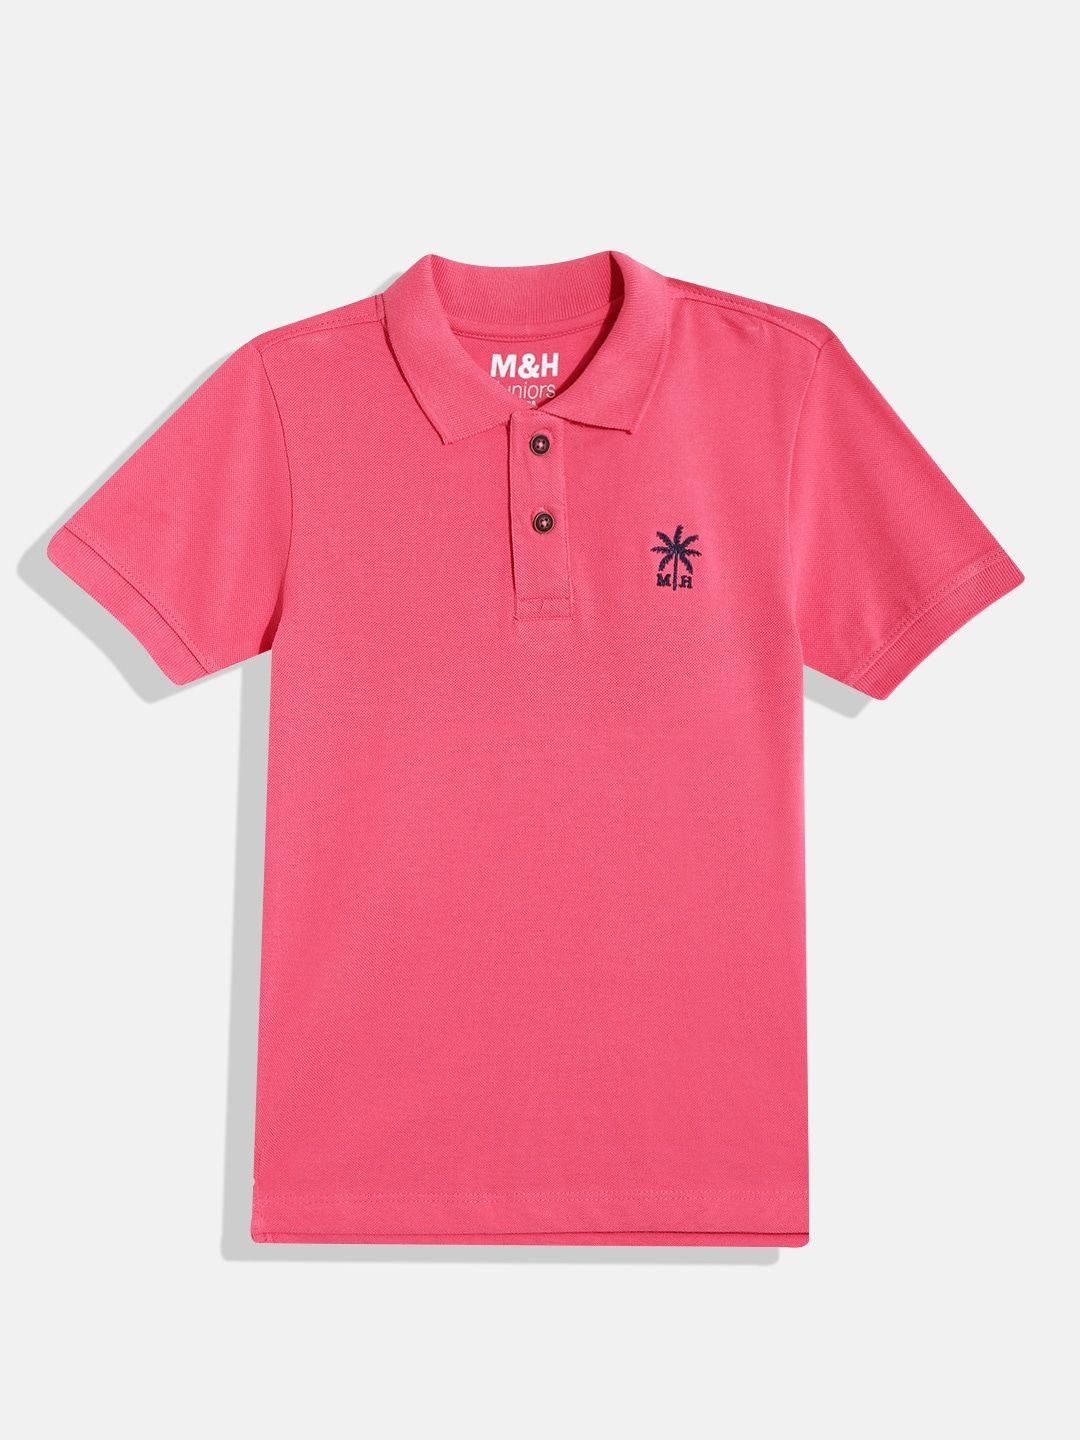 m&h juniors boys polo collar pure cotton t-shirt